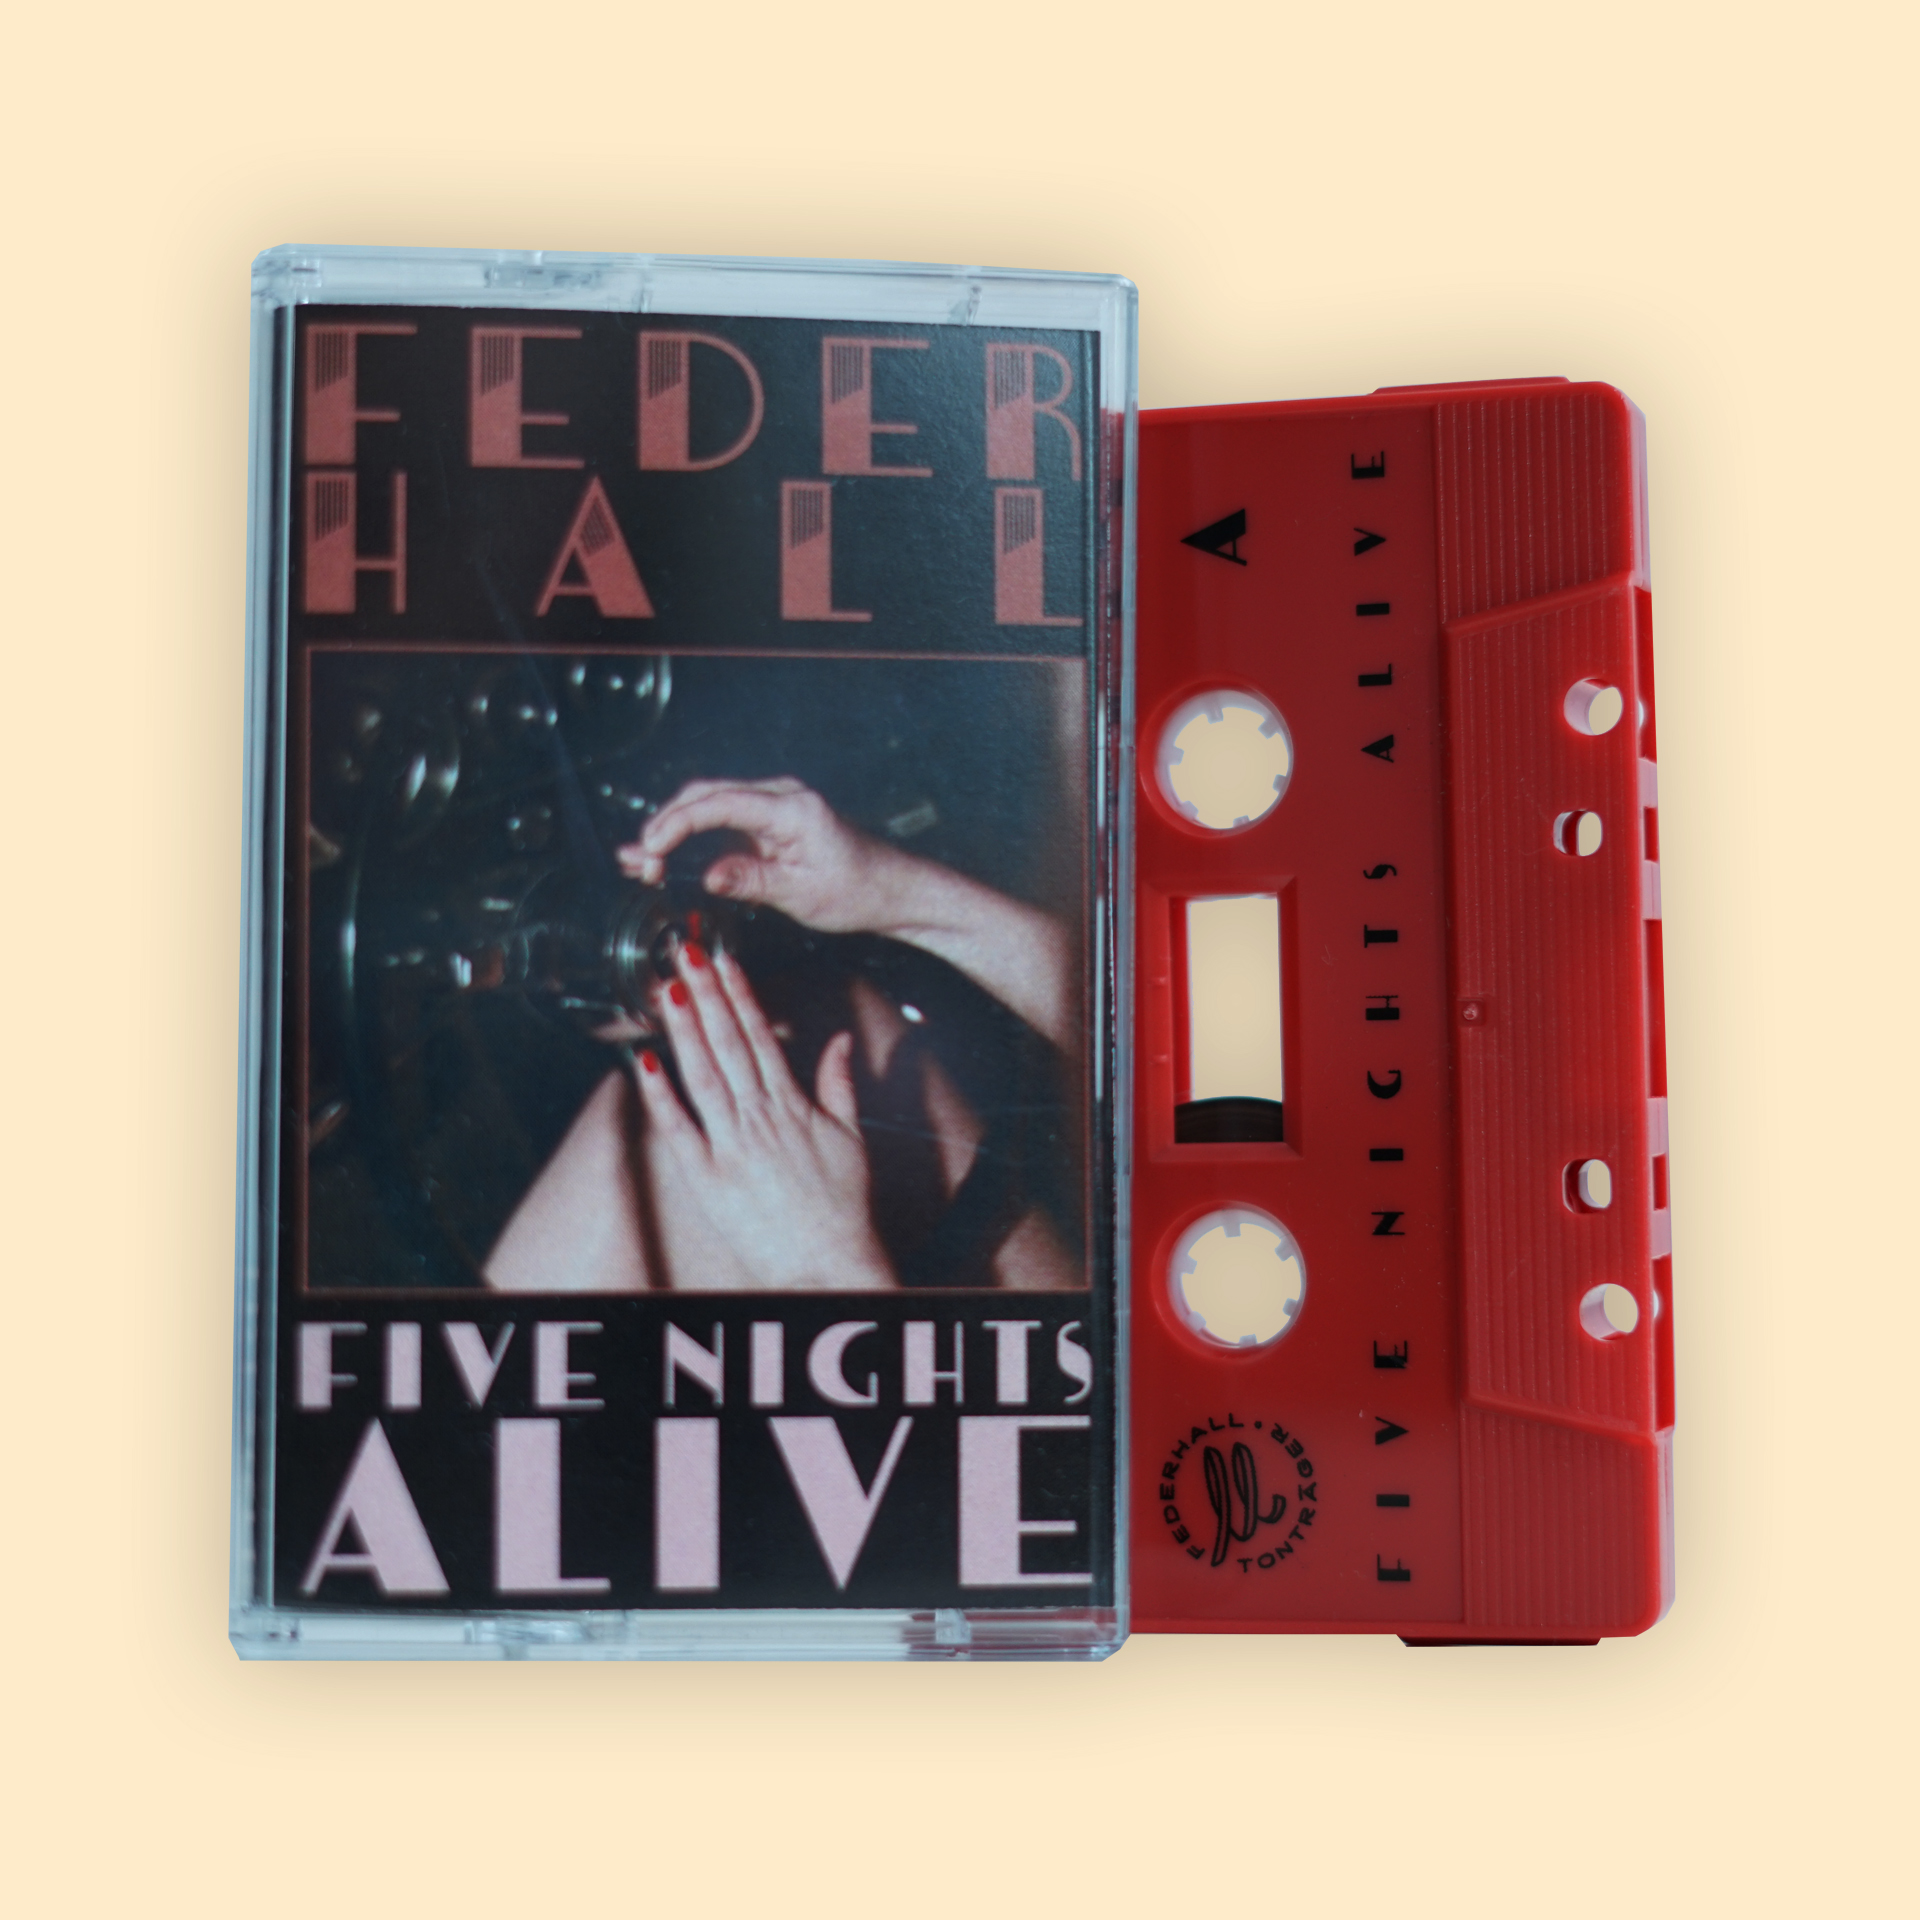 Five Nights Alive – EP [Tape]